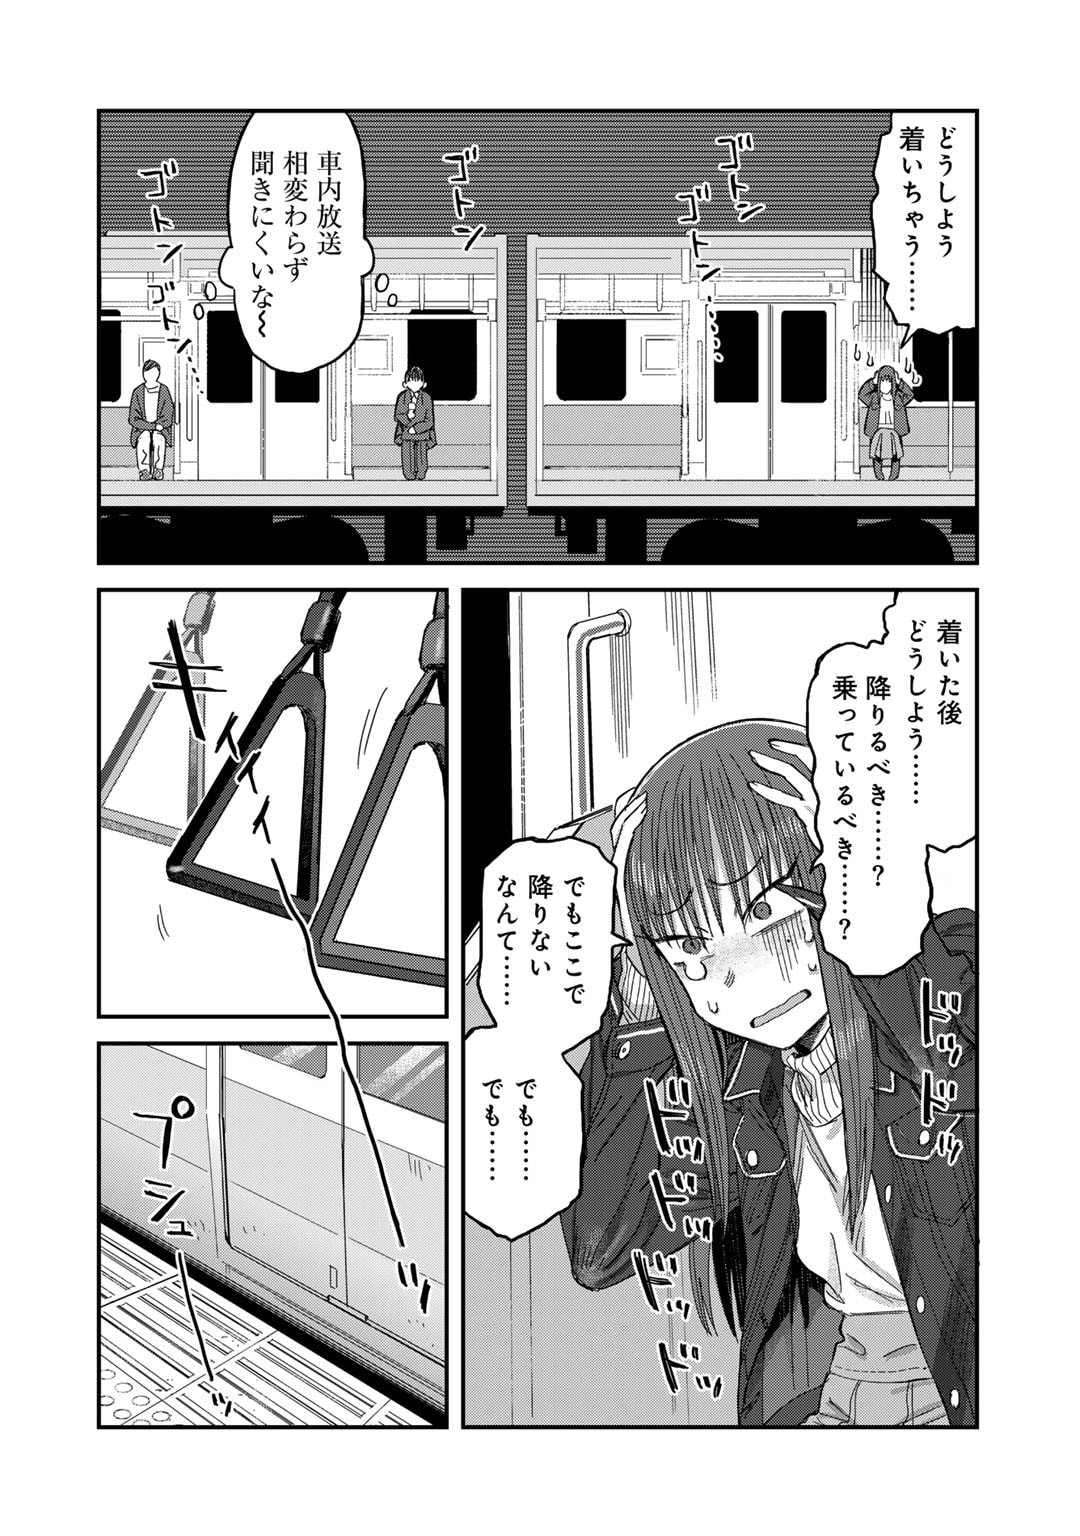 Kurono-san wa Occult ga Suki! - Chapter 4 - Page 16